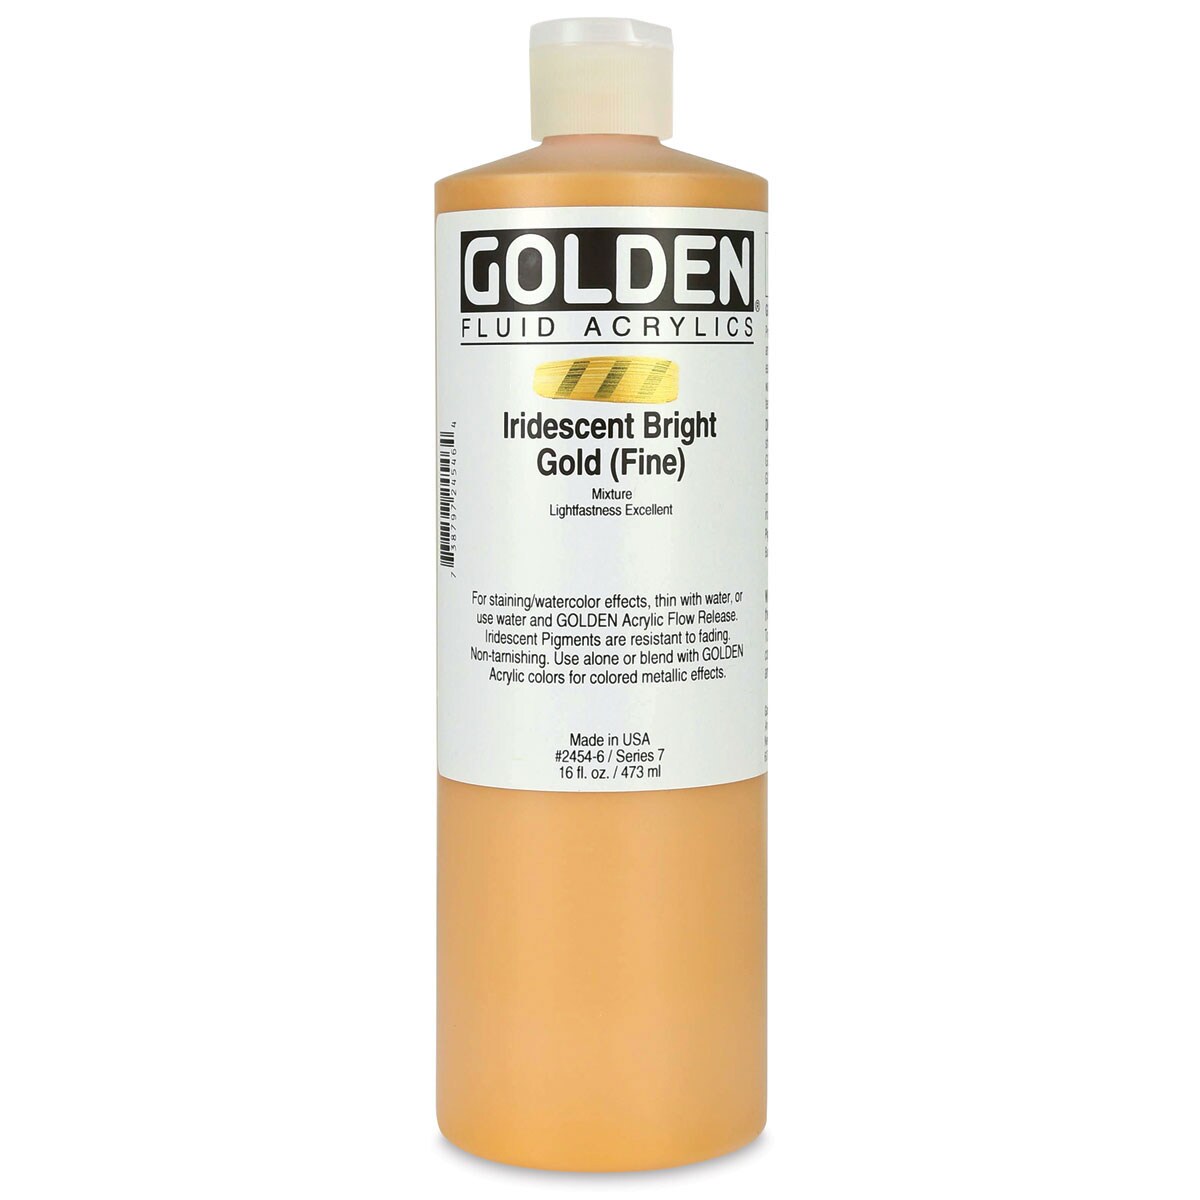 Golden Fluid Acrylics - Iridescent Bright Gold (Fine), 16 oz bottle